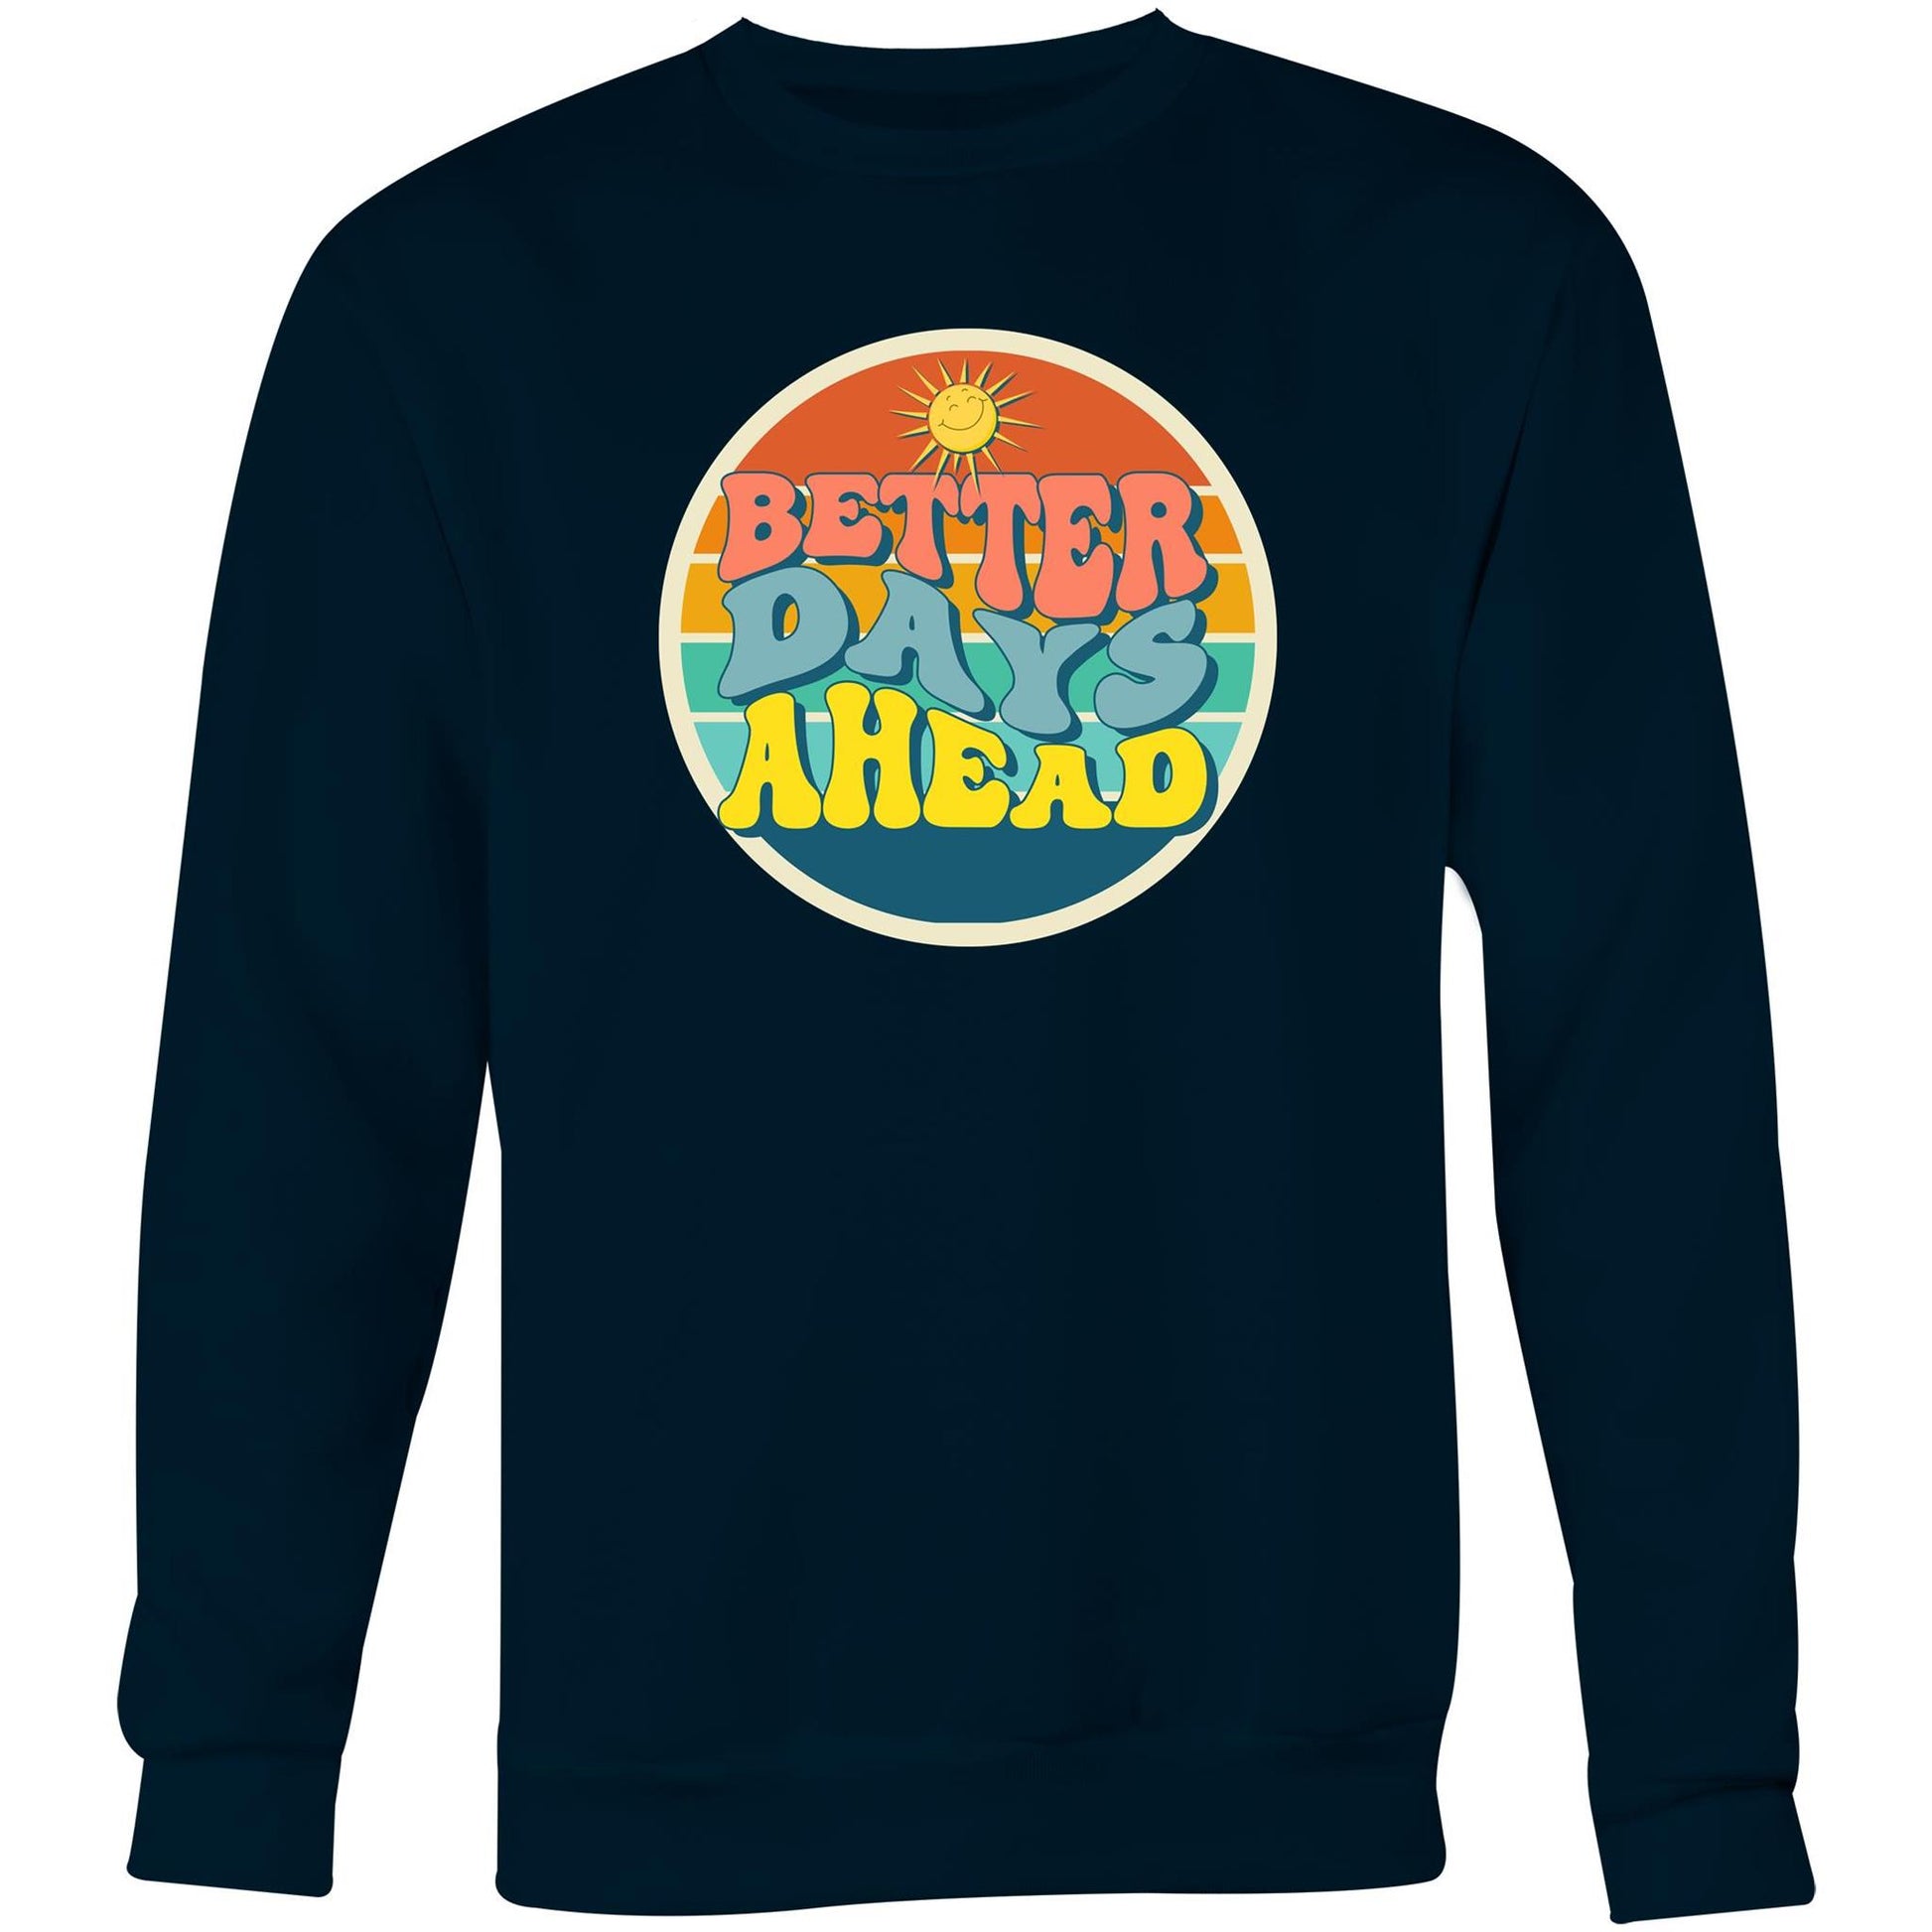 Better Days Ahead - Crew Sweatshirt Navy Sweatshirt Motivation Retro